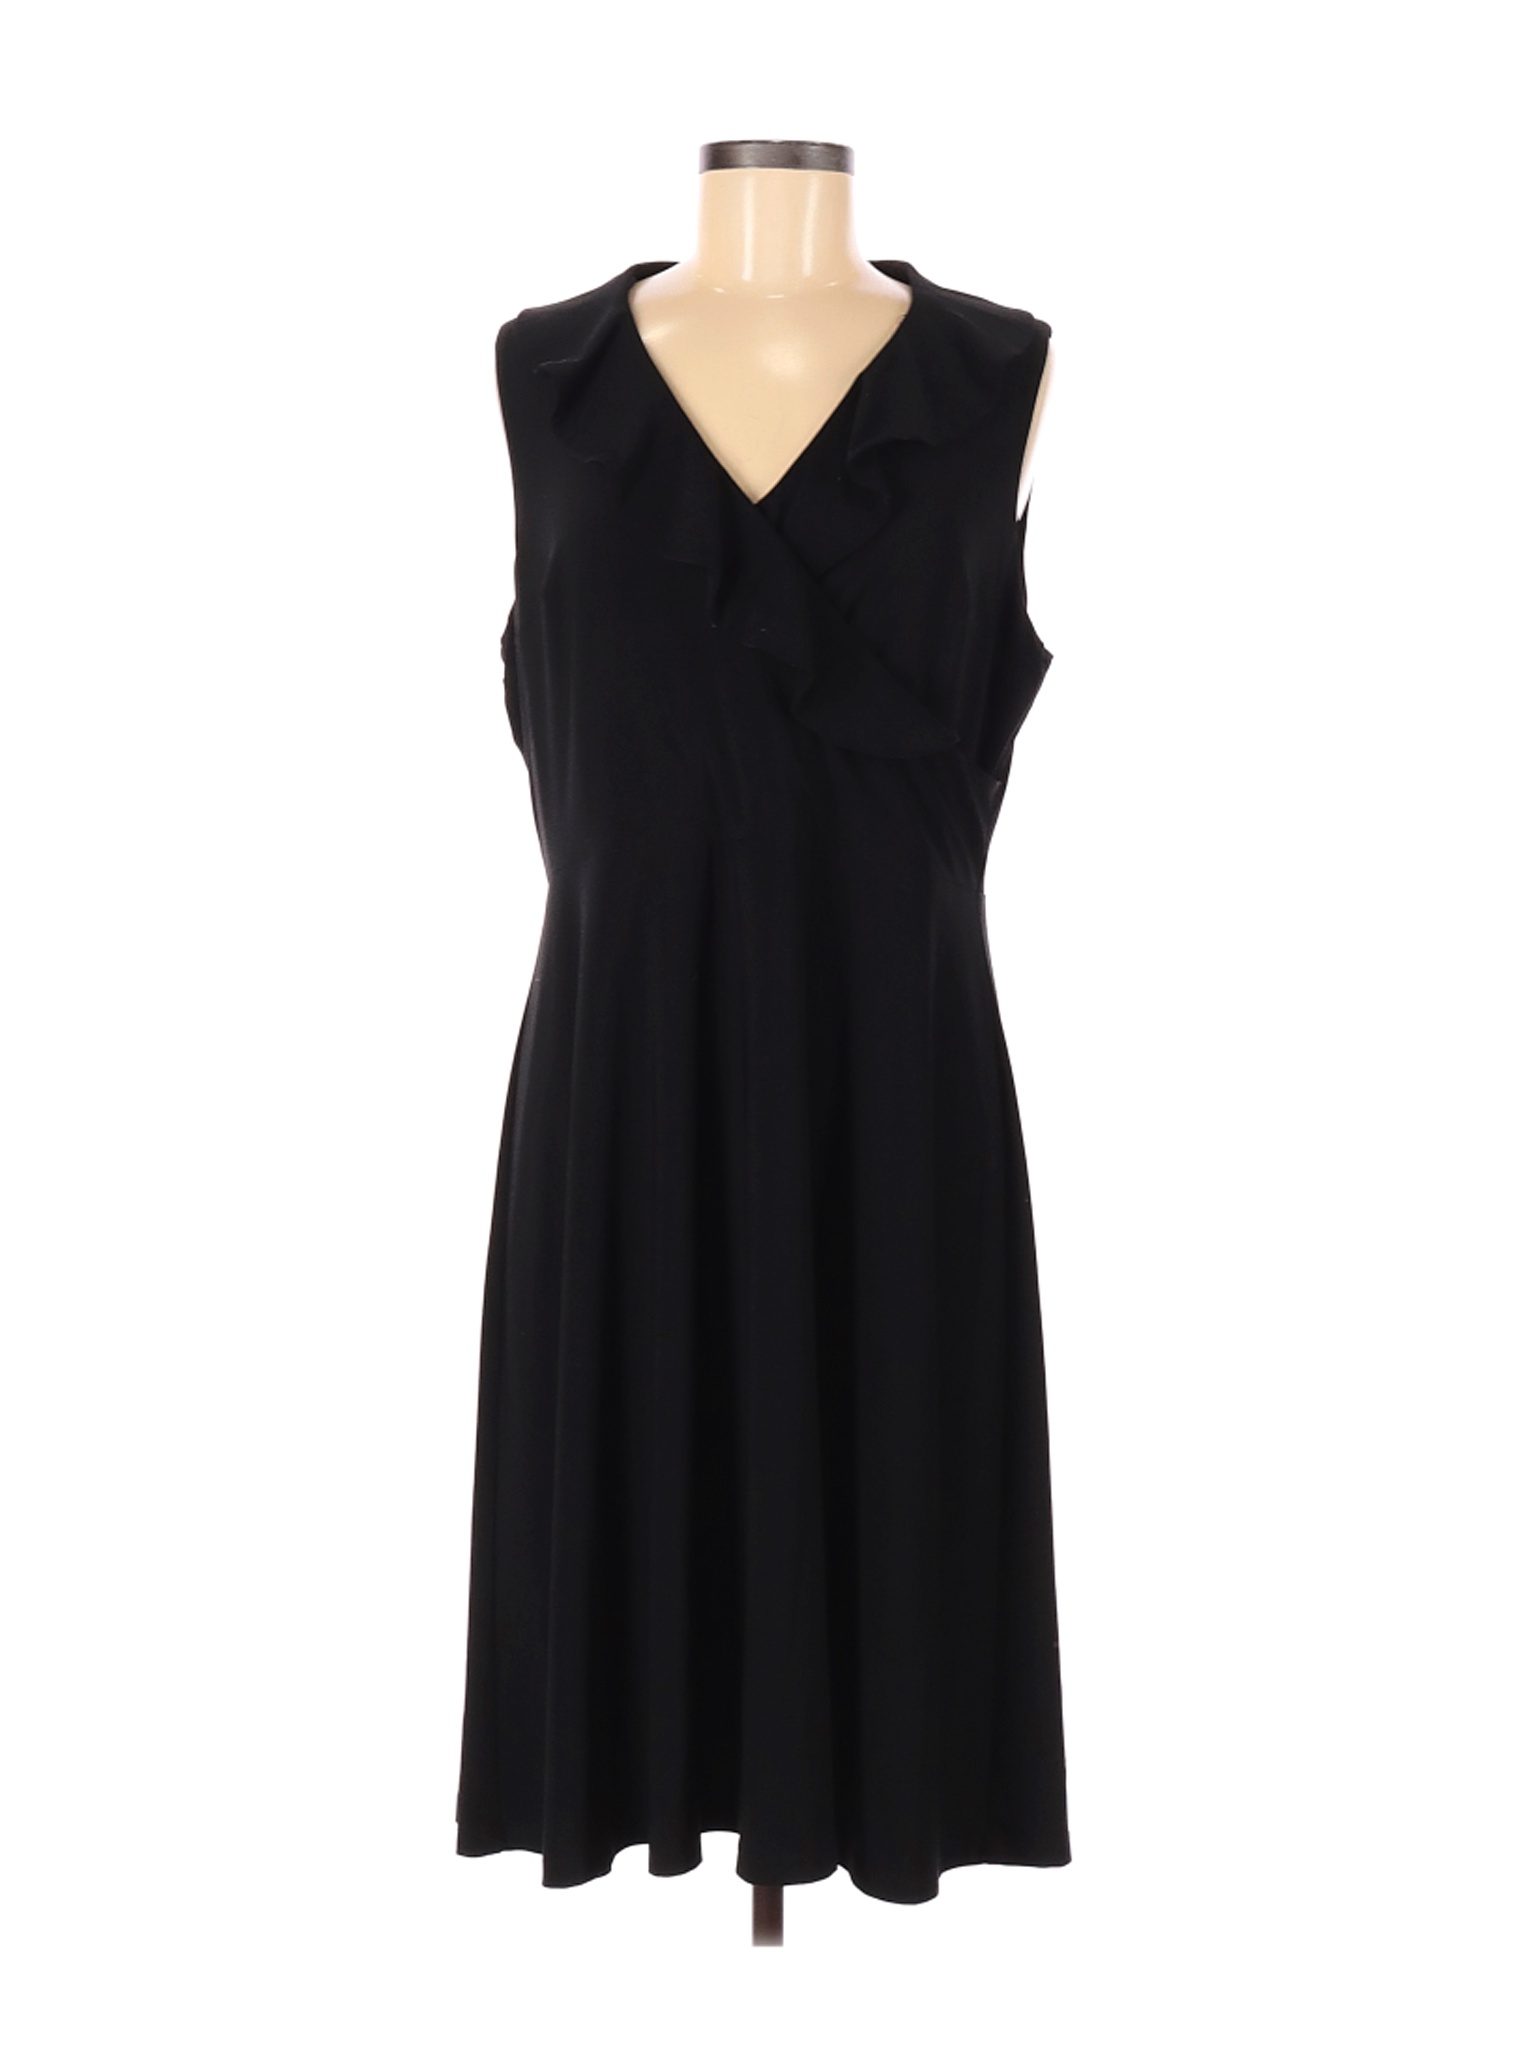 Tommy Hilfiger Women Black Casual Dress M | eBay